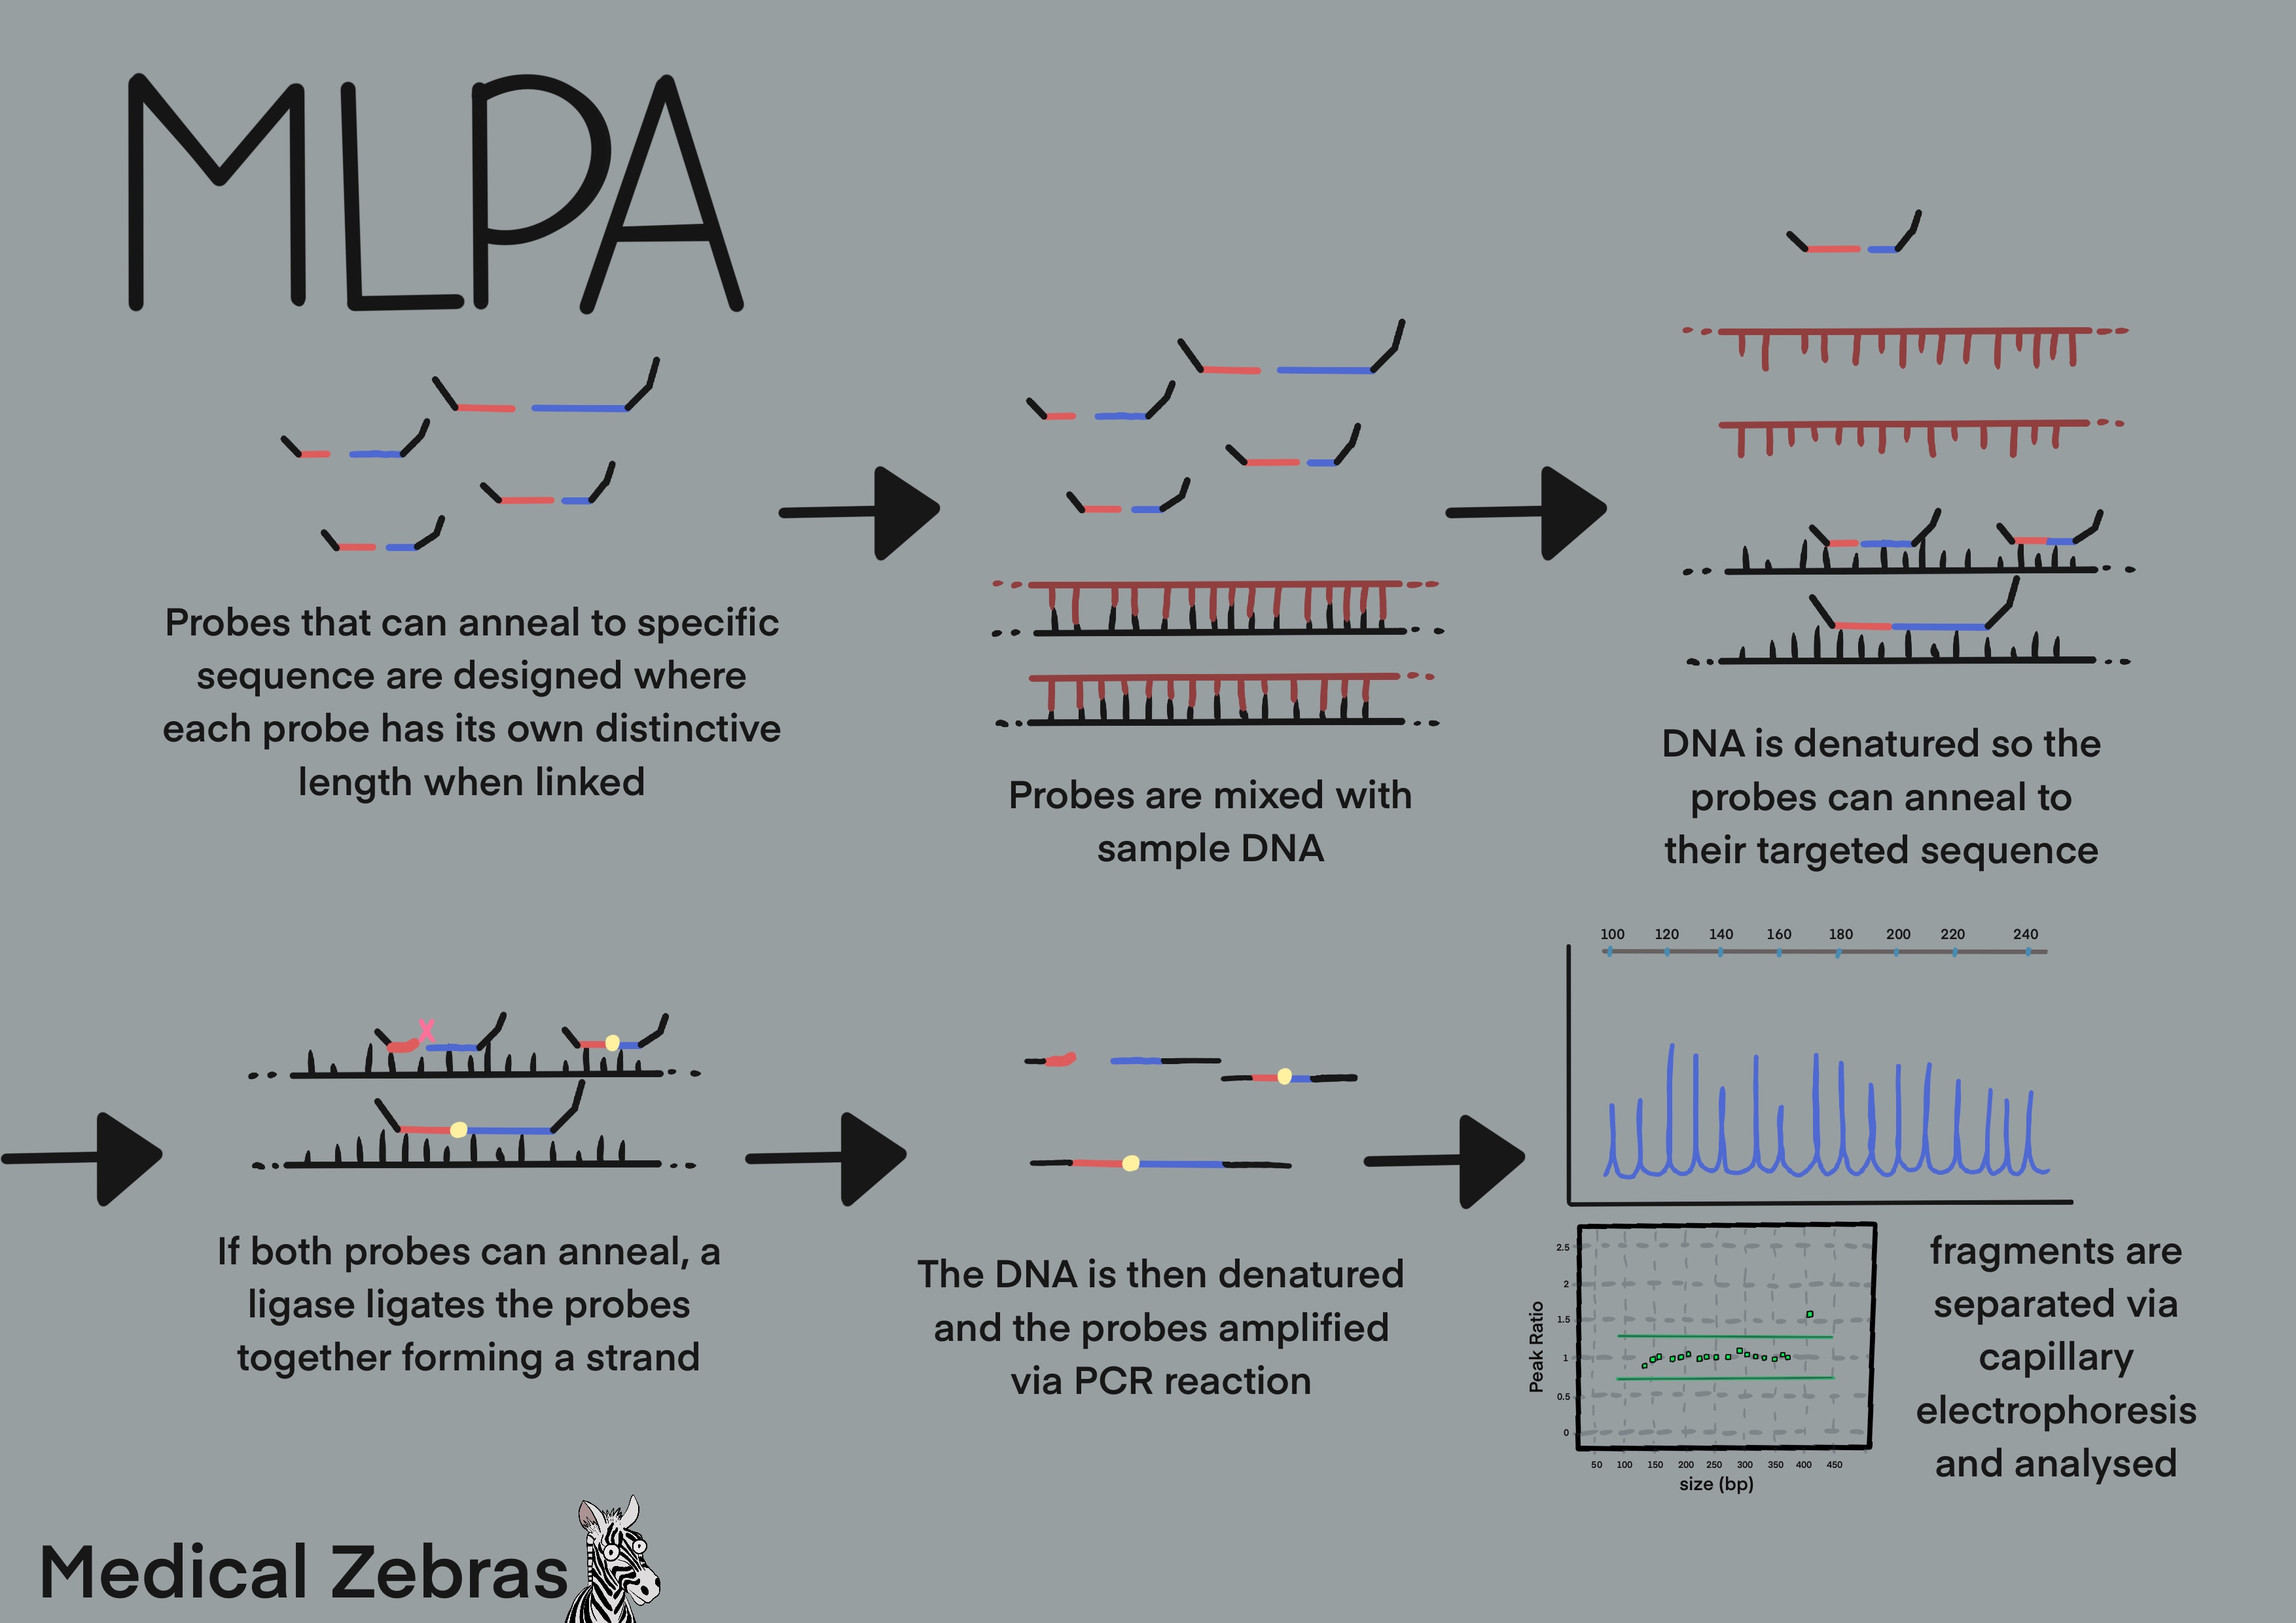 MLPA explained